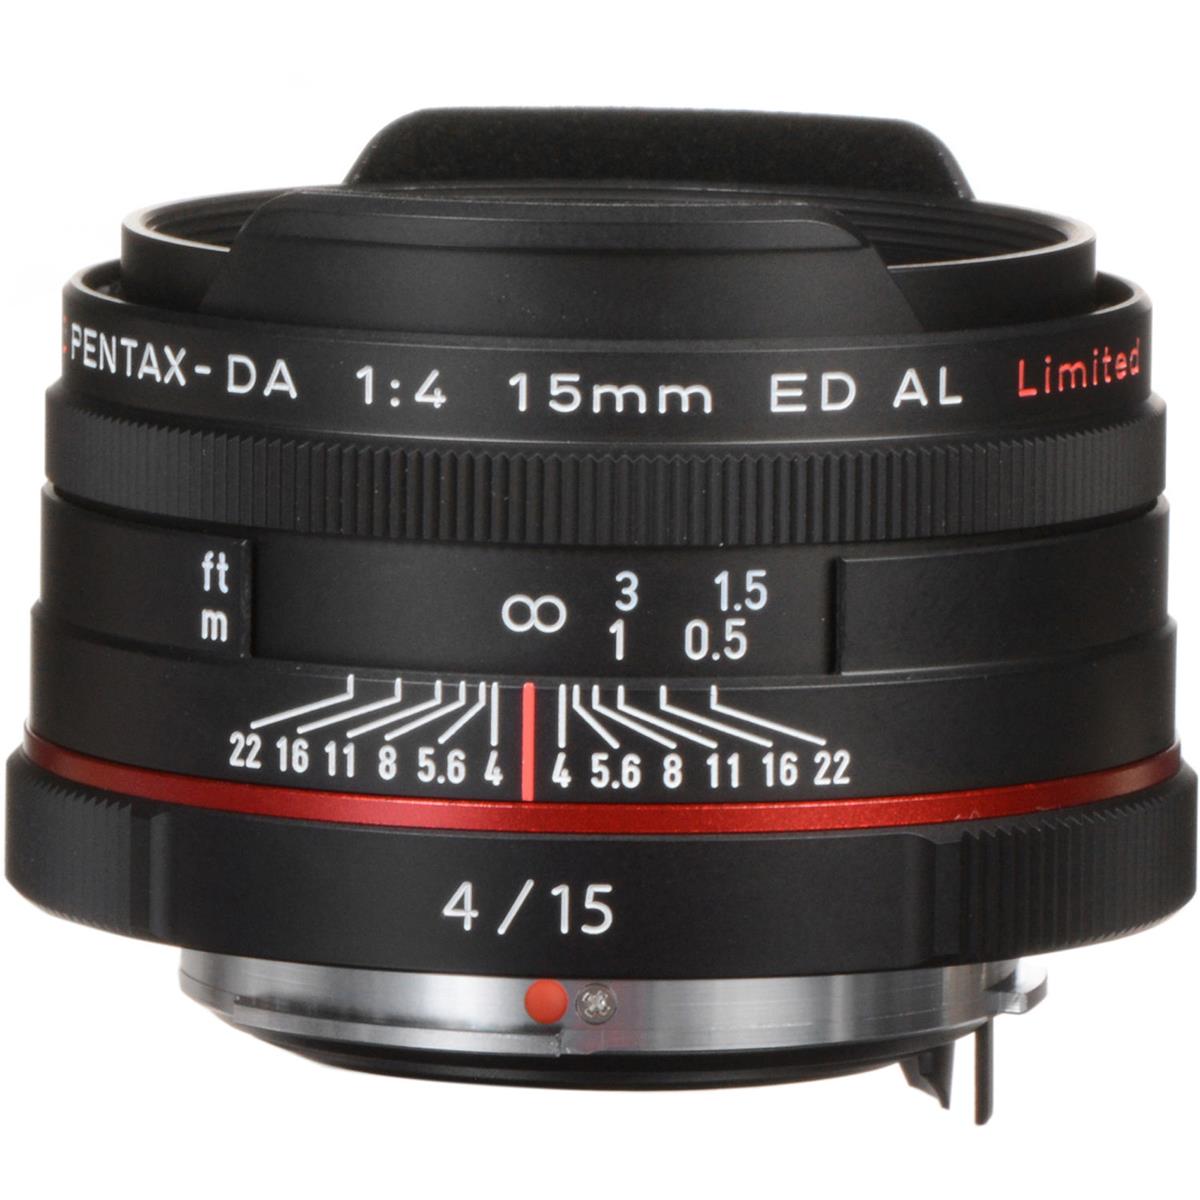 PENTAX DA 15mm F4 ED AL Limited Wide Angle Lens - Black for sale 